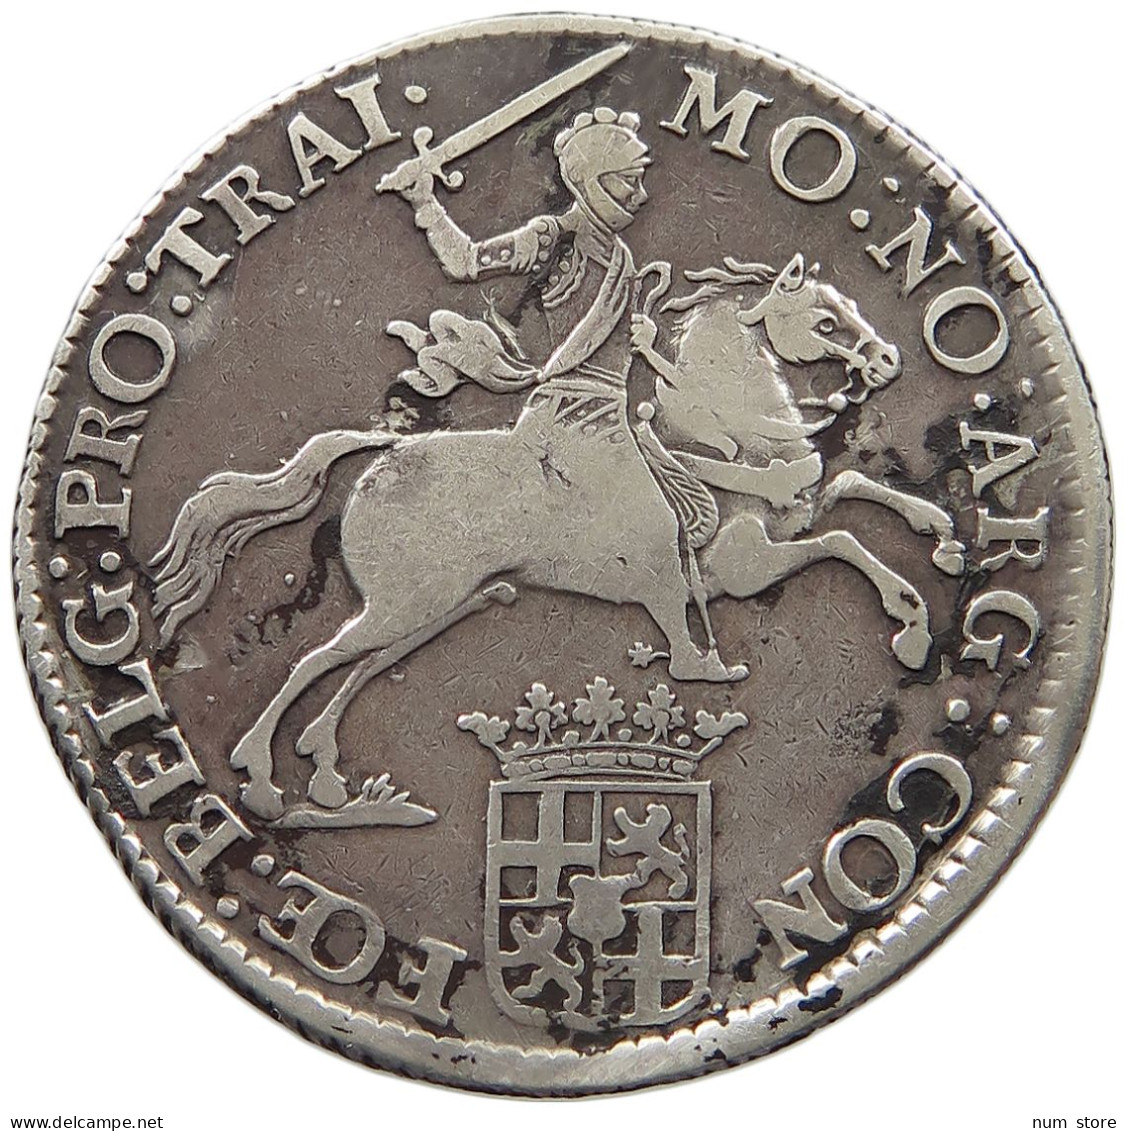 NETHERLANDS UTRECHT 1/2 DUKATON DUCATON ZILVEREN RIJDER 1769  #MA 024971 - Monnaies Provinciales